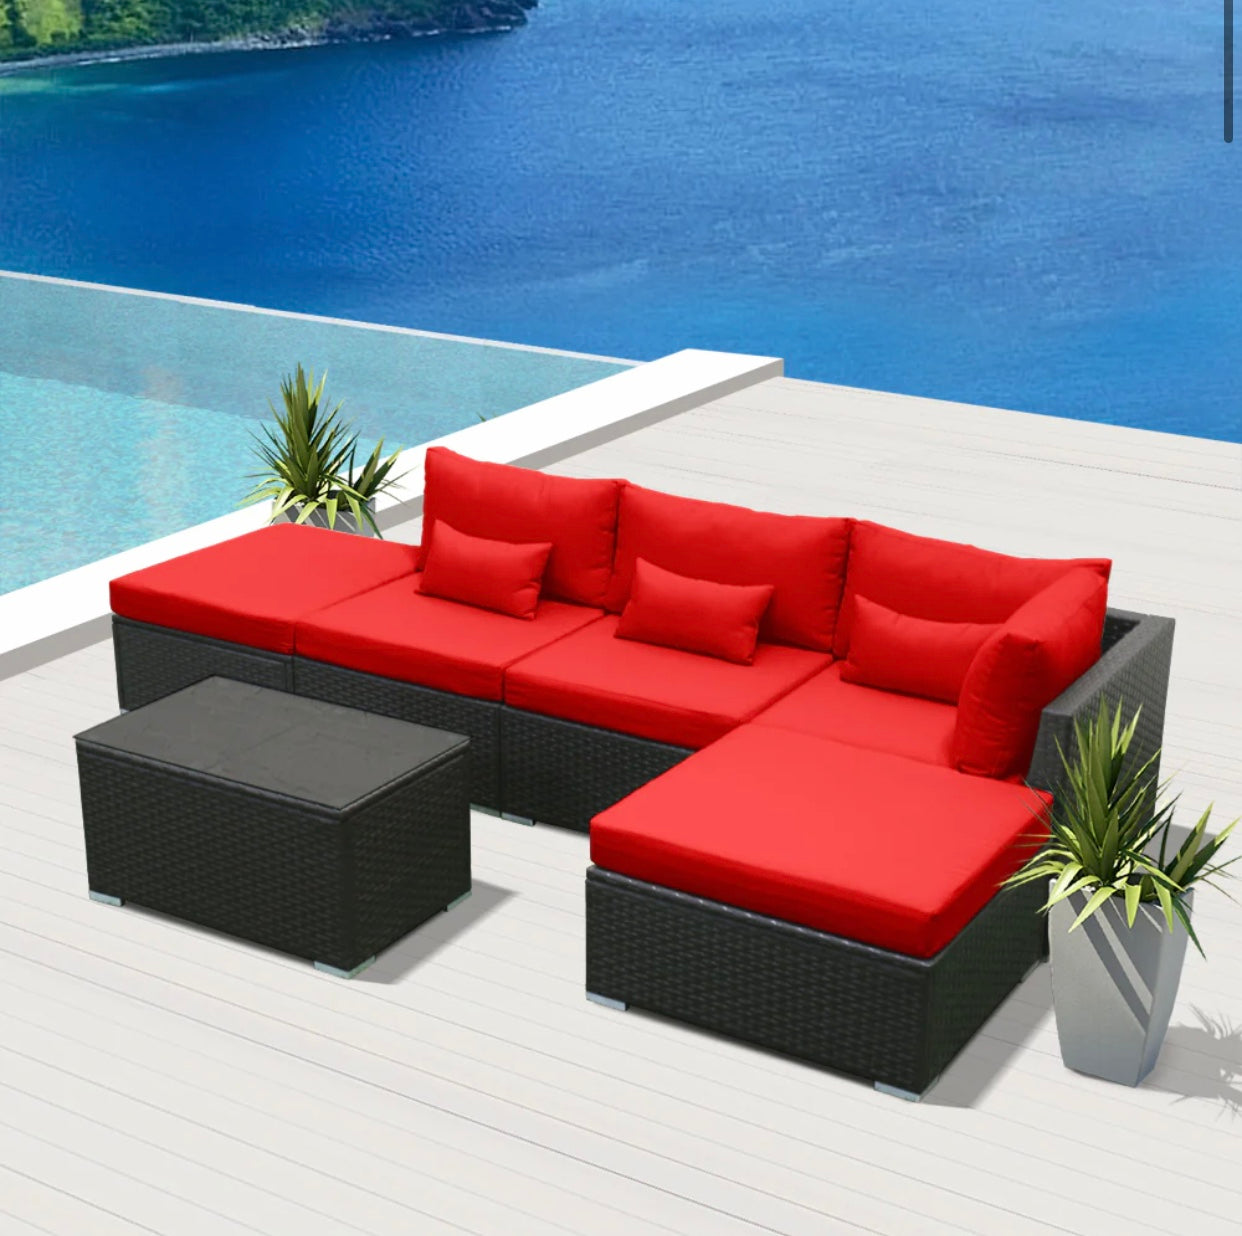 Crimson Red Rattan Outdoor Garden Furniture Sets in 6 Pieces Six